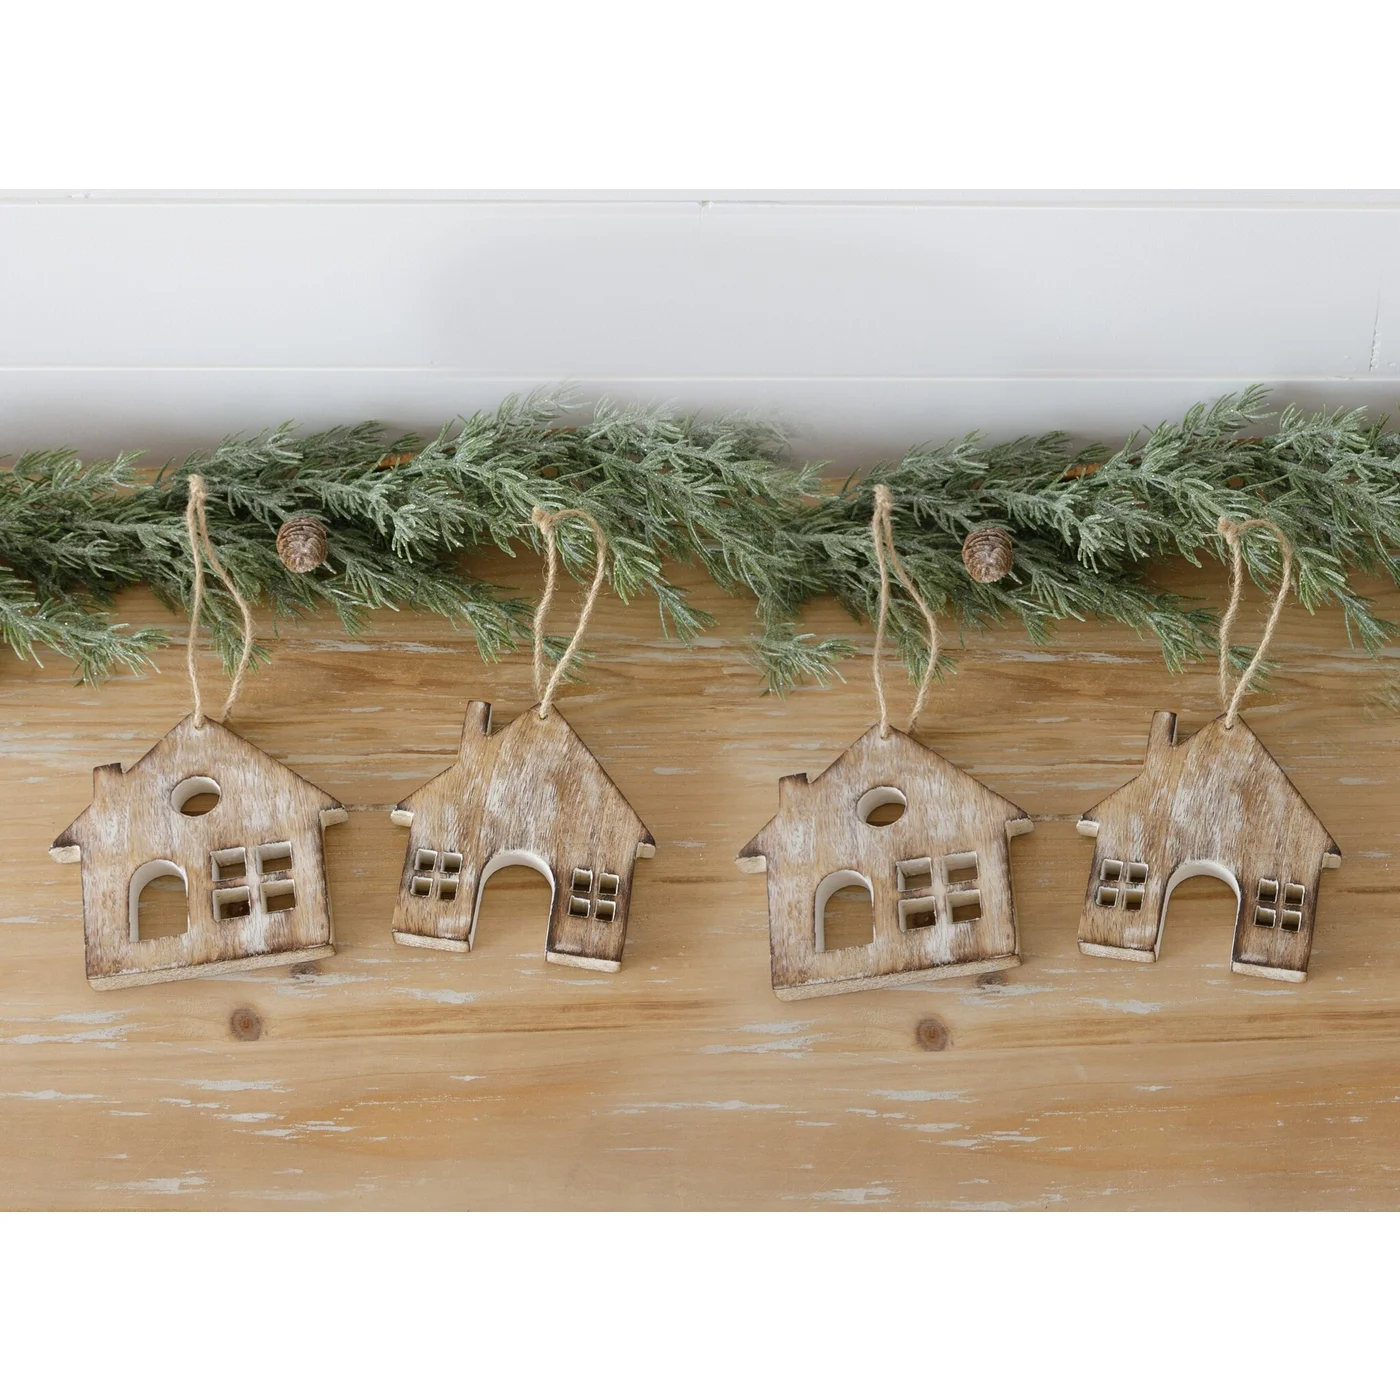 Set of 4 Rustic Block House Ornaments